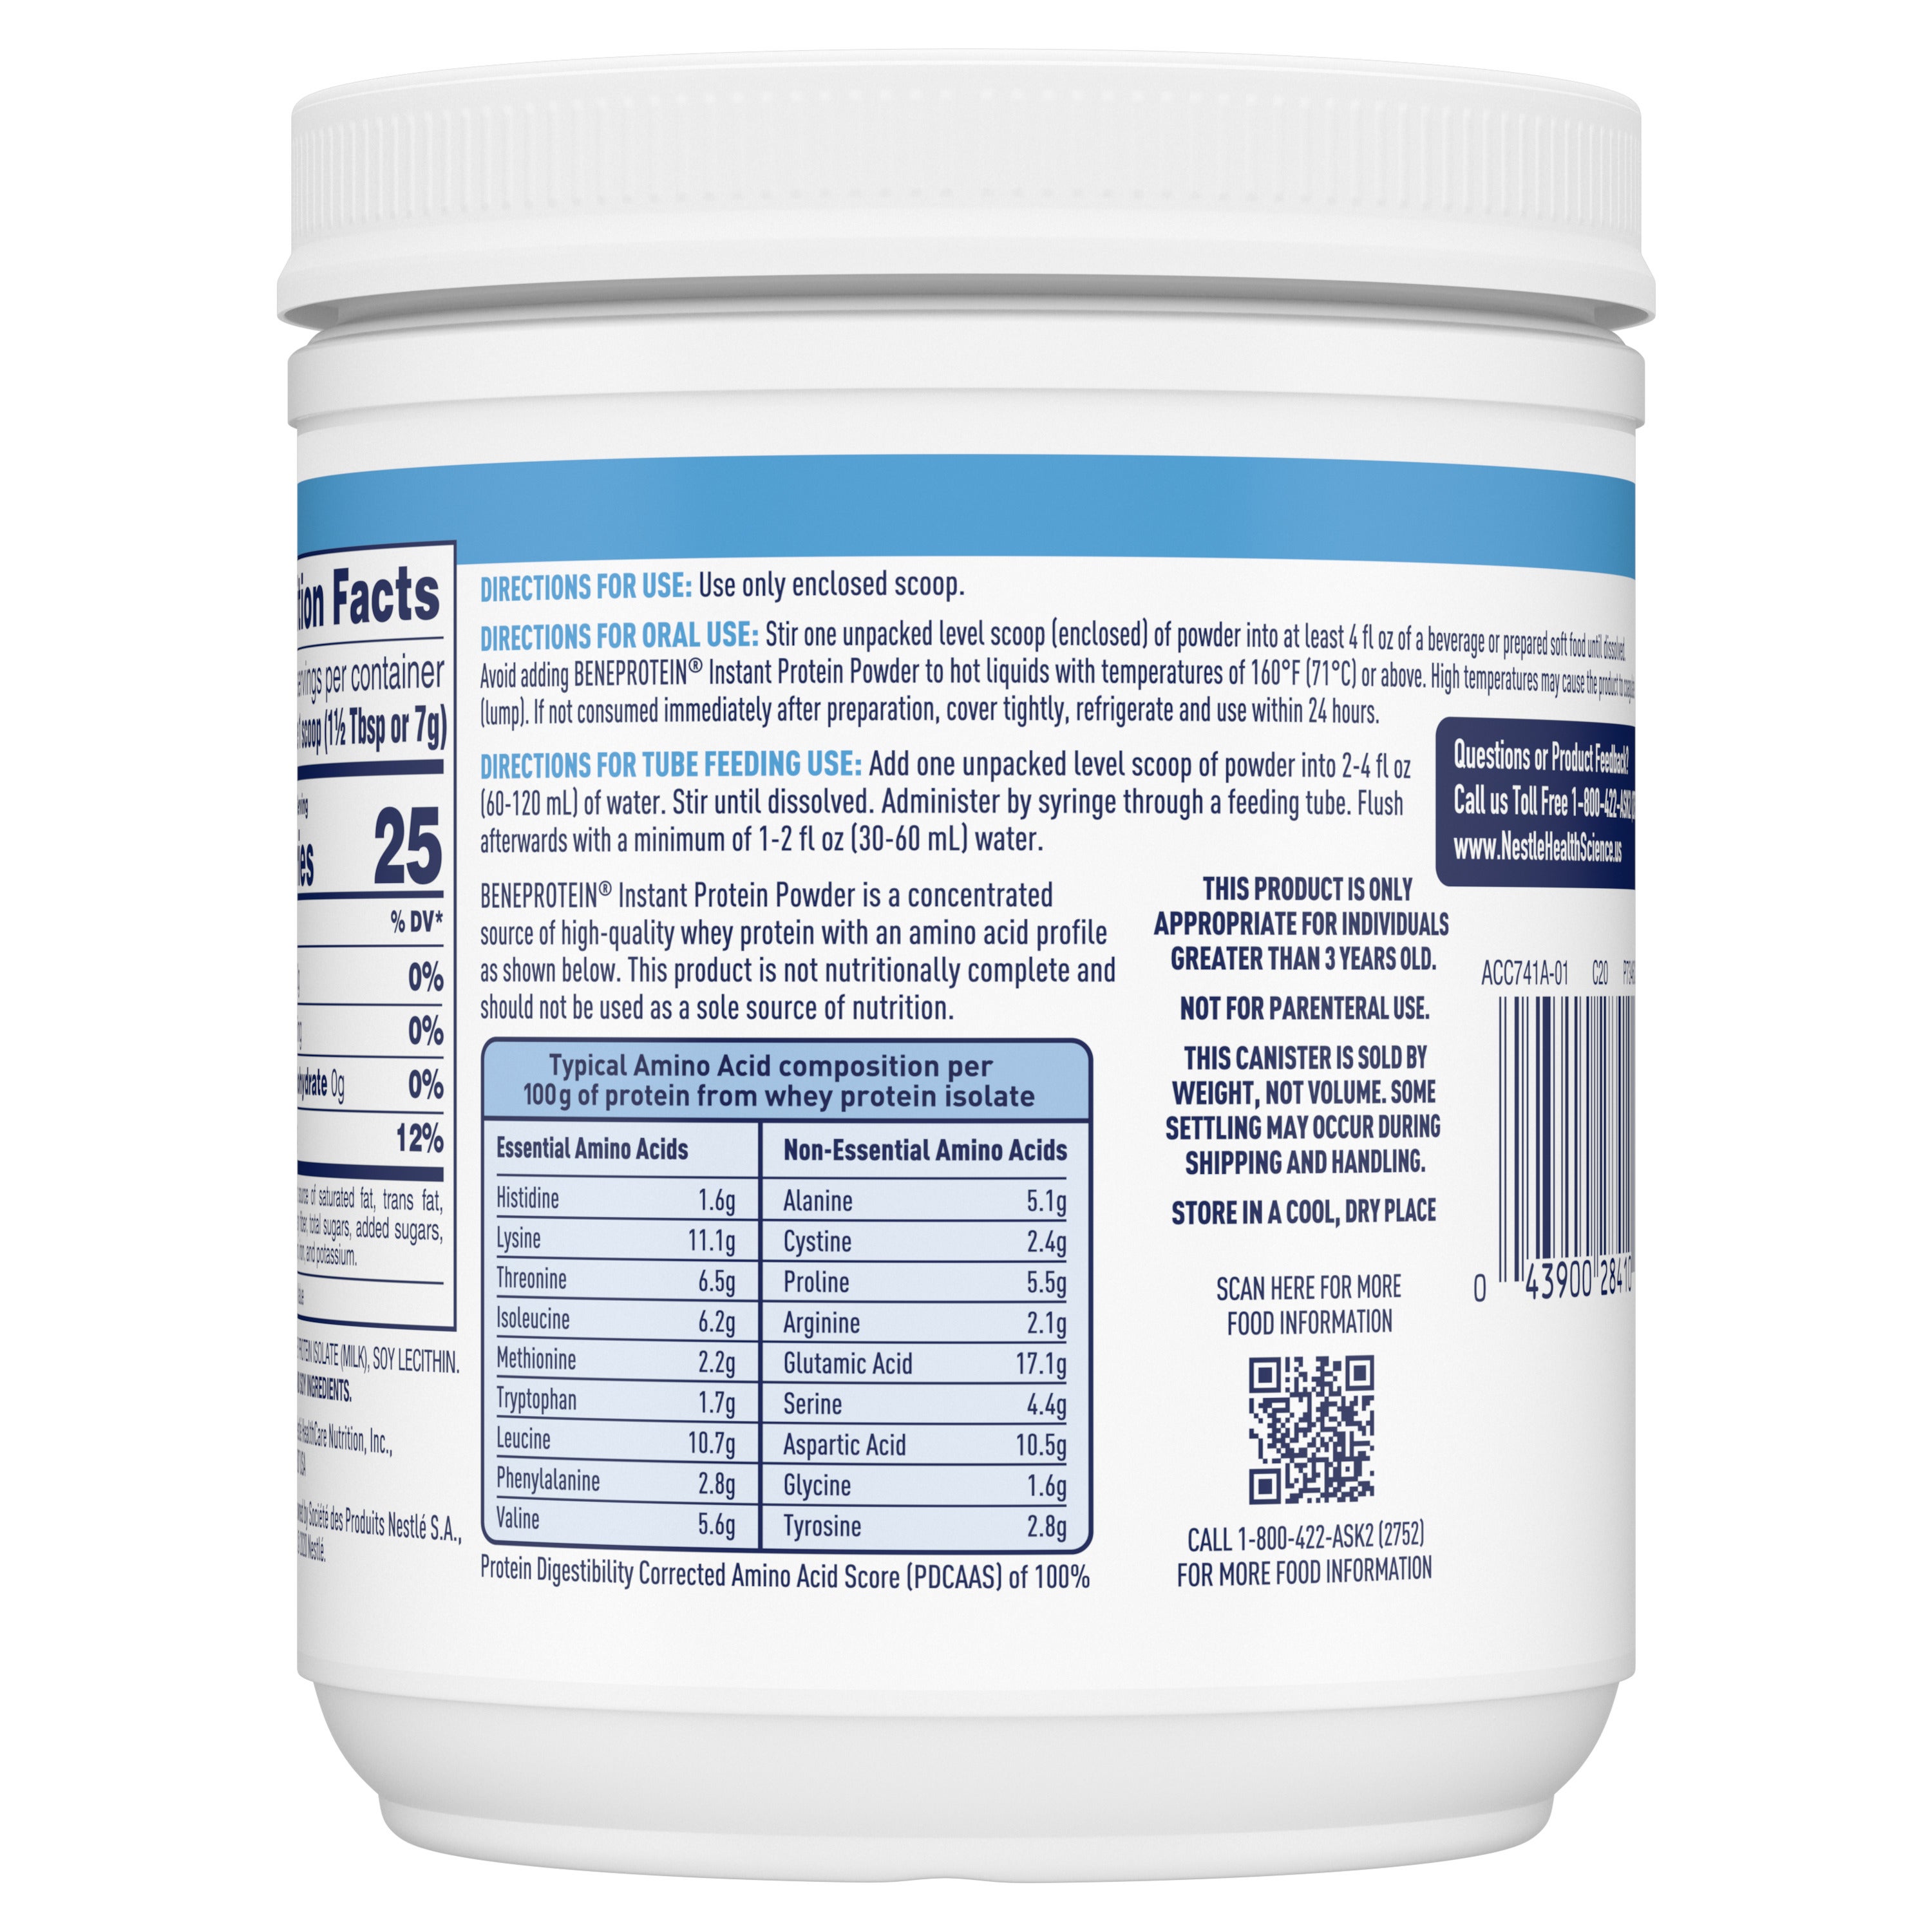 beneprotein-ingredients-packshot